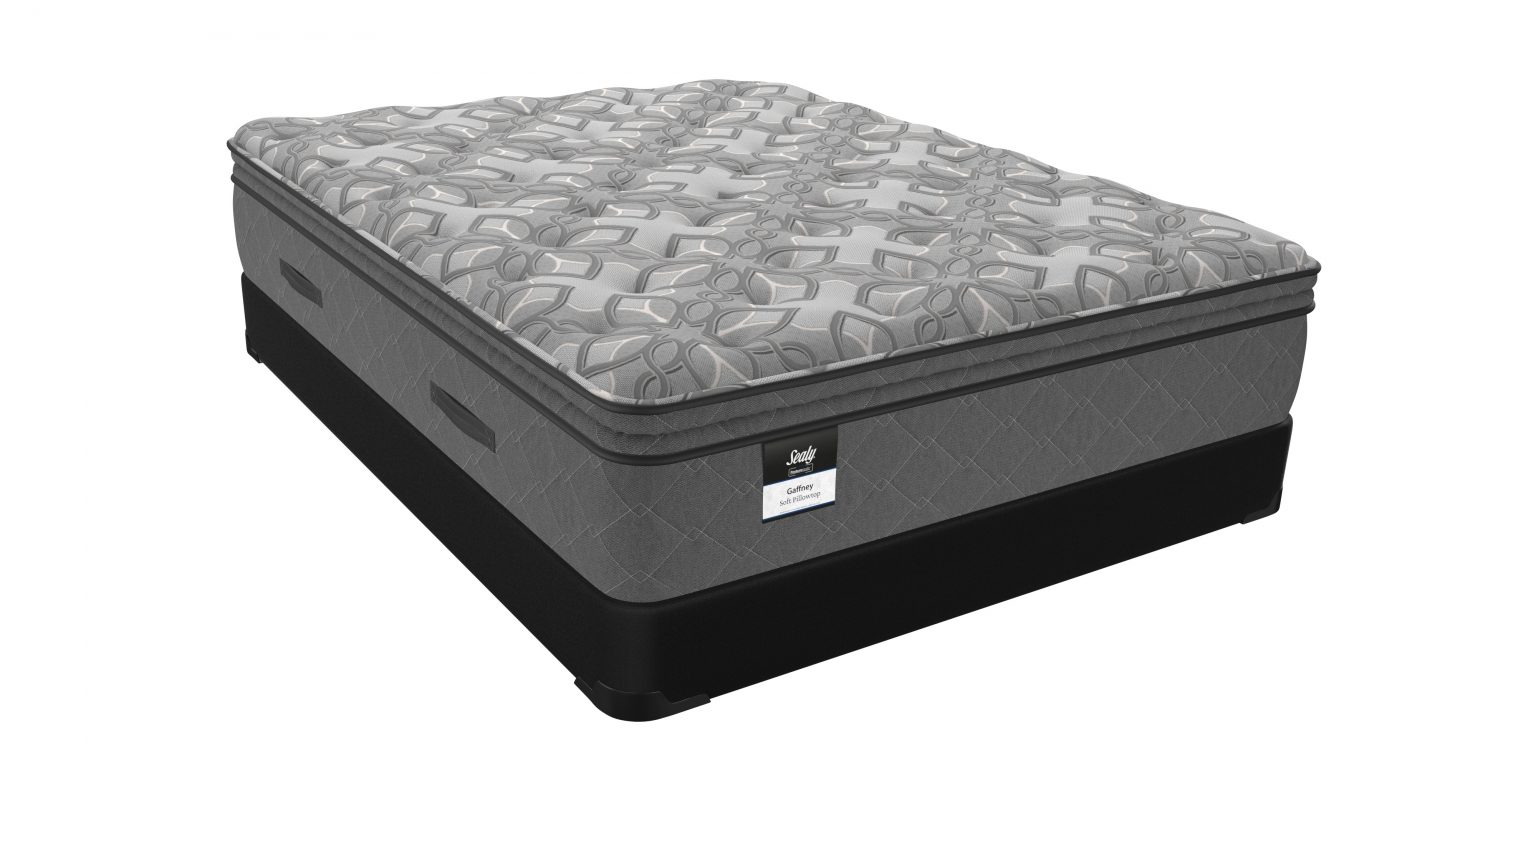 sealy posturepedic sayer prolux ltd plush pillowtop mattress